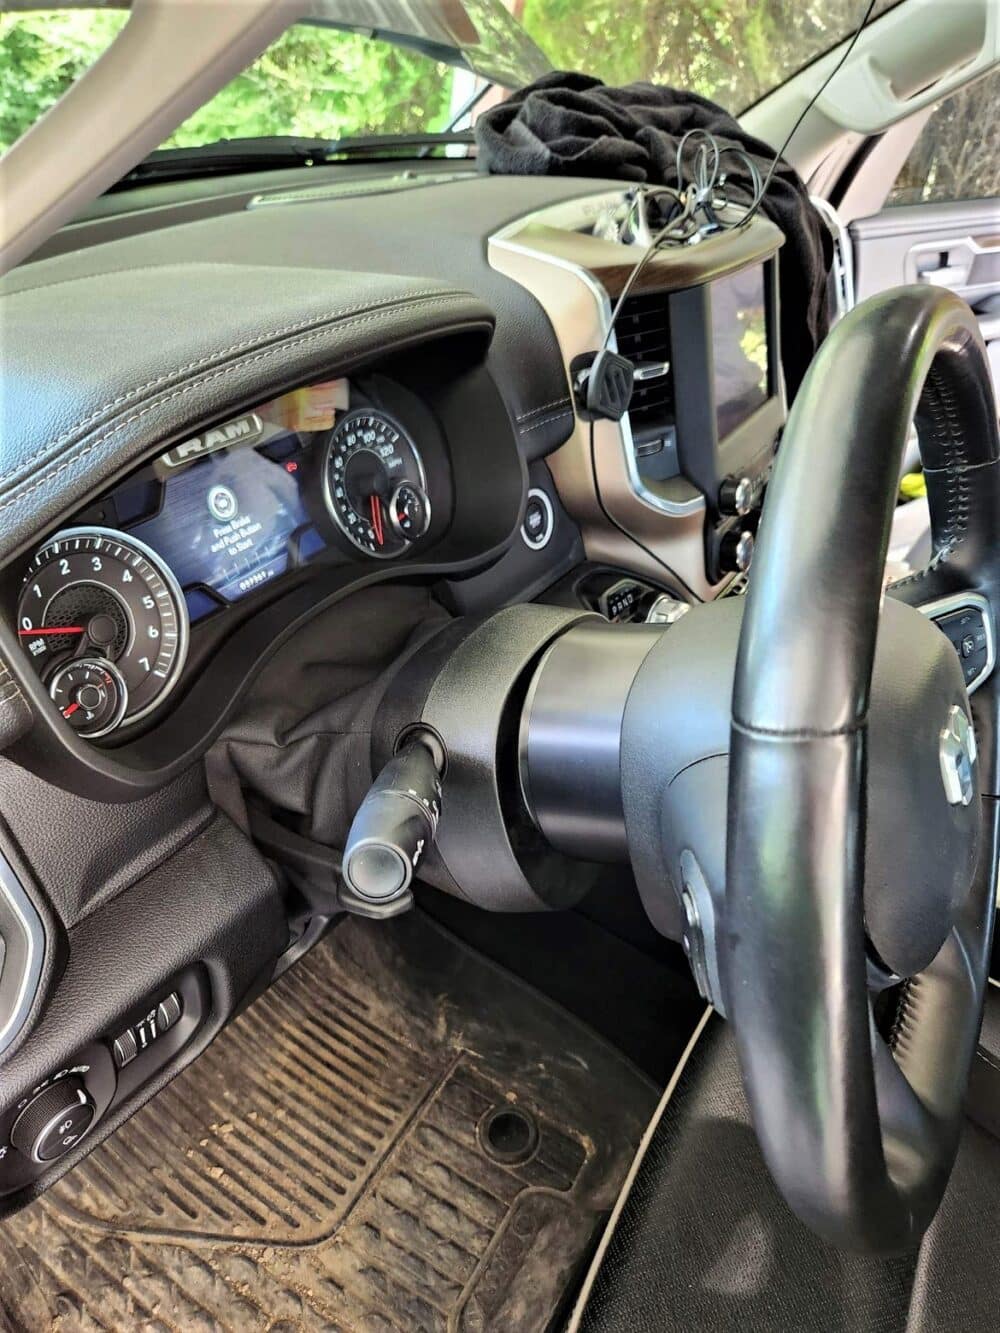 Ram 5 steering wheel spacer installed overview